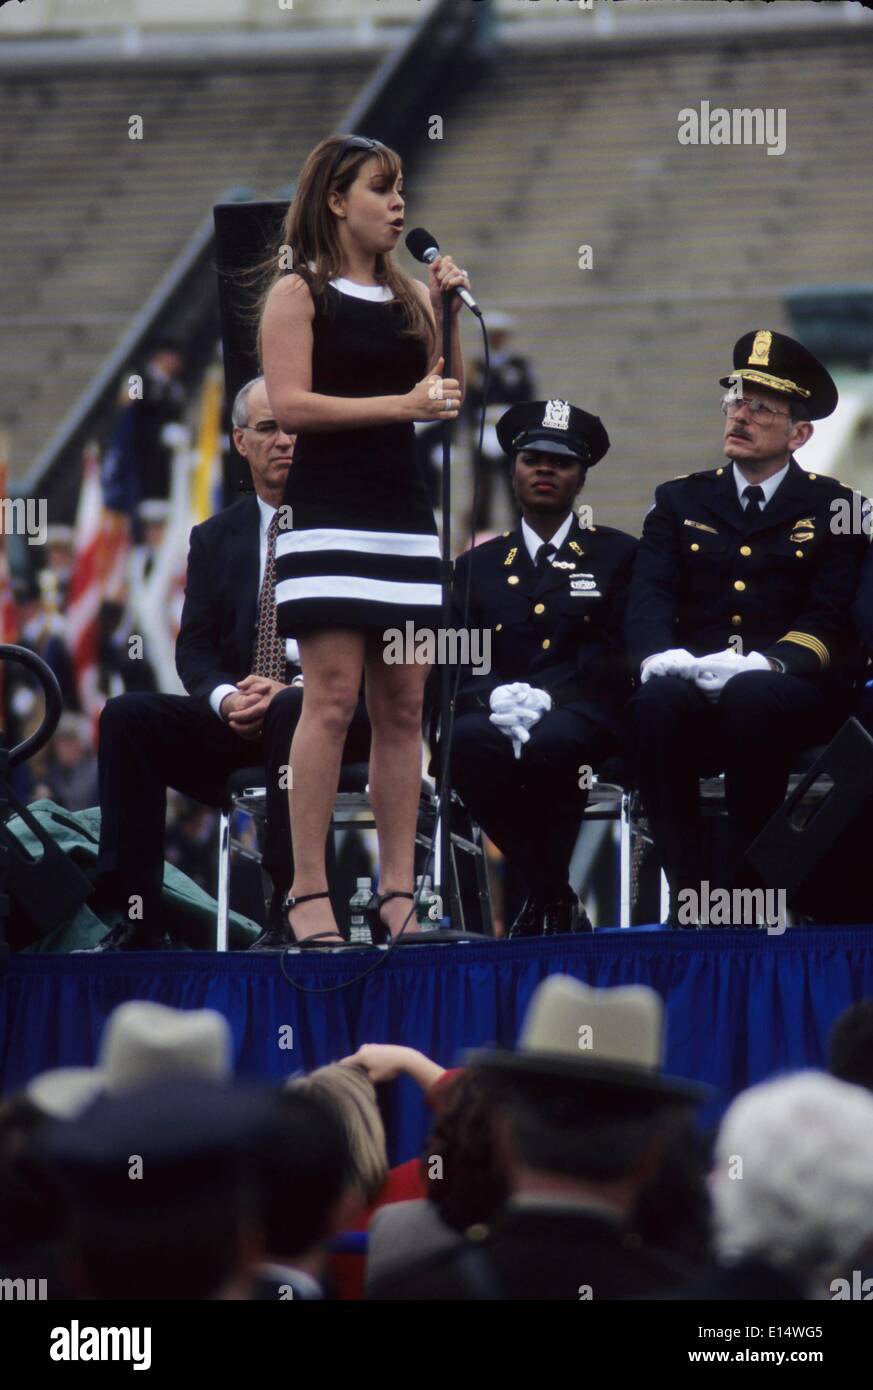 MARIAH CAREY 1996 15. jährlichen National Peace Officer Memorial Day Service Washington, DC.k5008jkel. (Kredit-Bild: © James M. Kelly/Globe Photos/ZUMAPRESS.com) Stockfoto